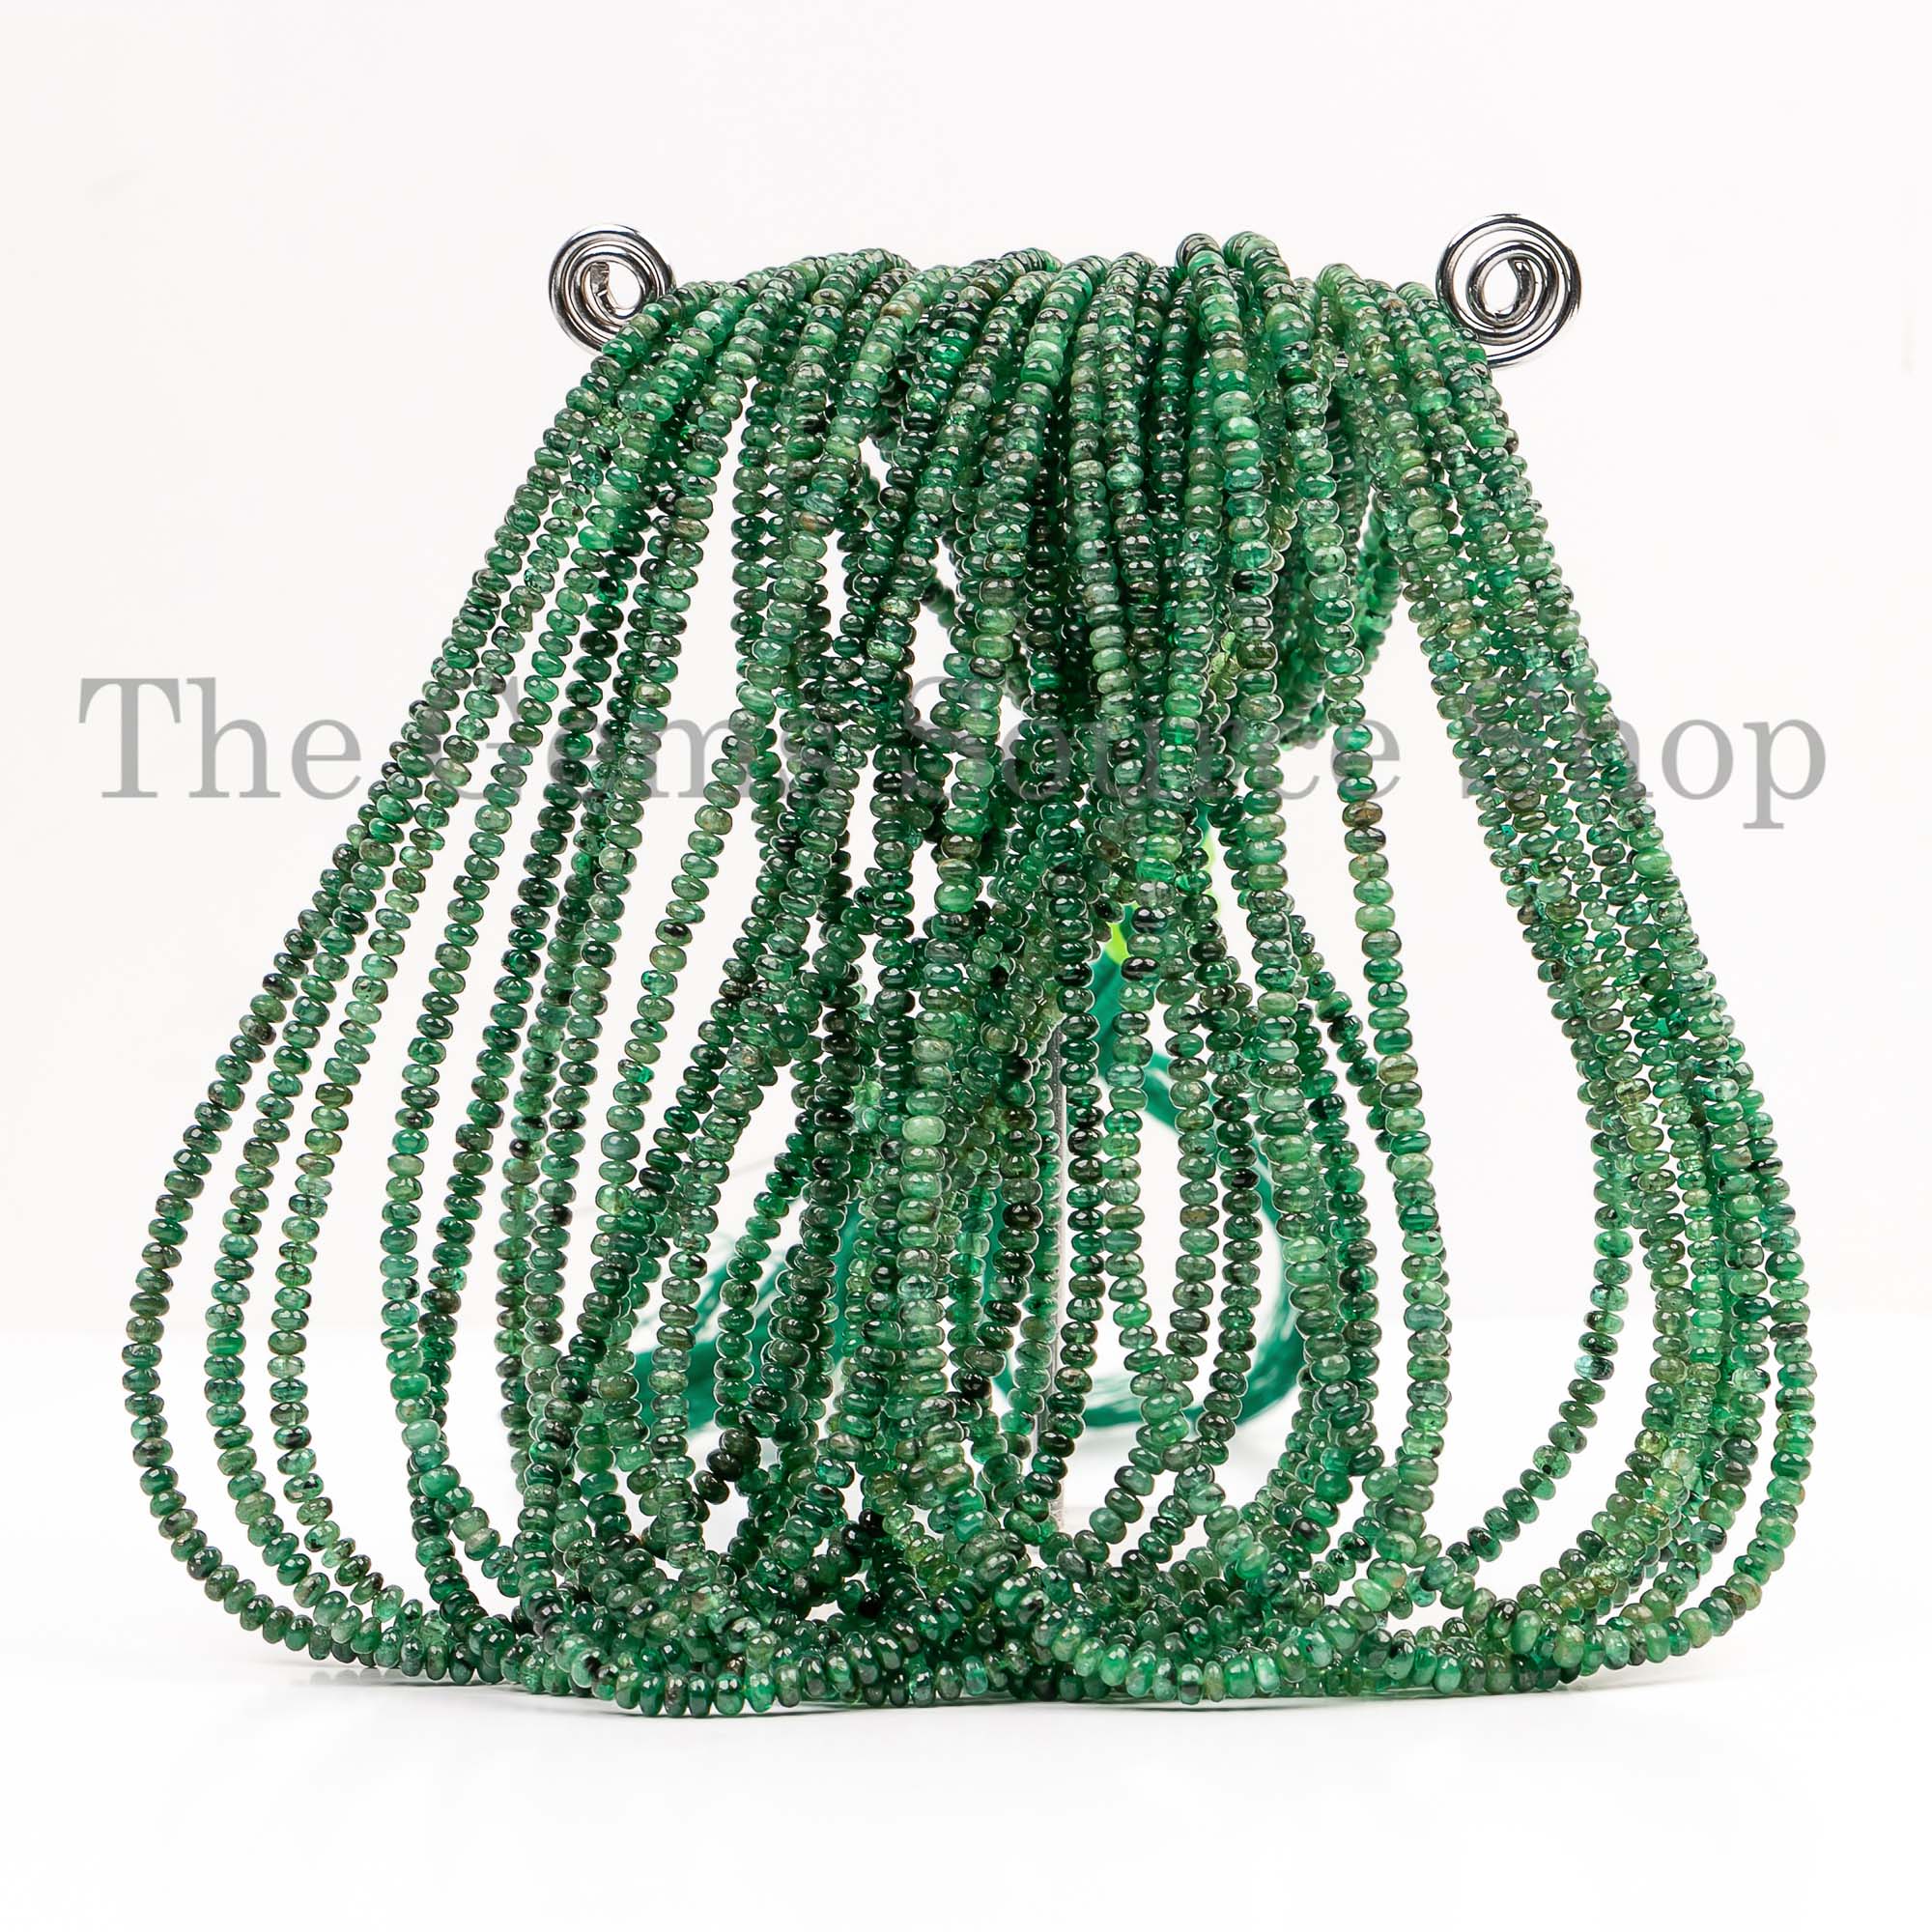 Emerald Beads, Emerald Smooth Beads, Emerald Rondelle Shape Beads, Plain Emerald Beads